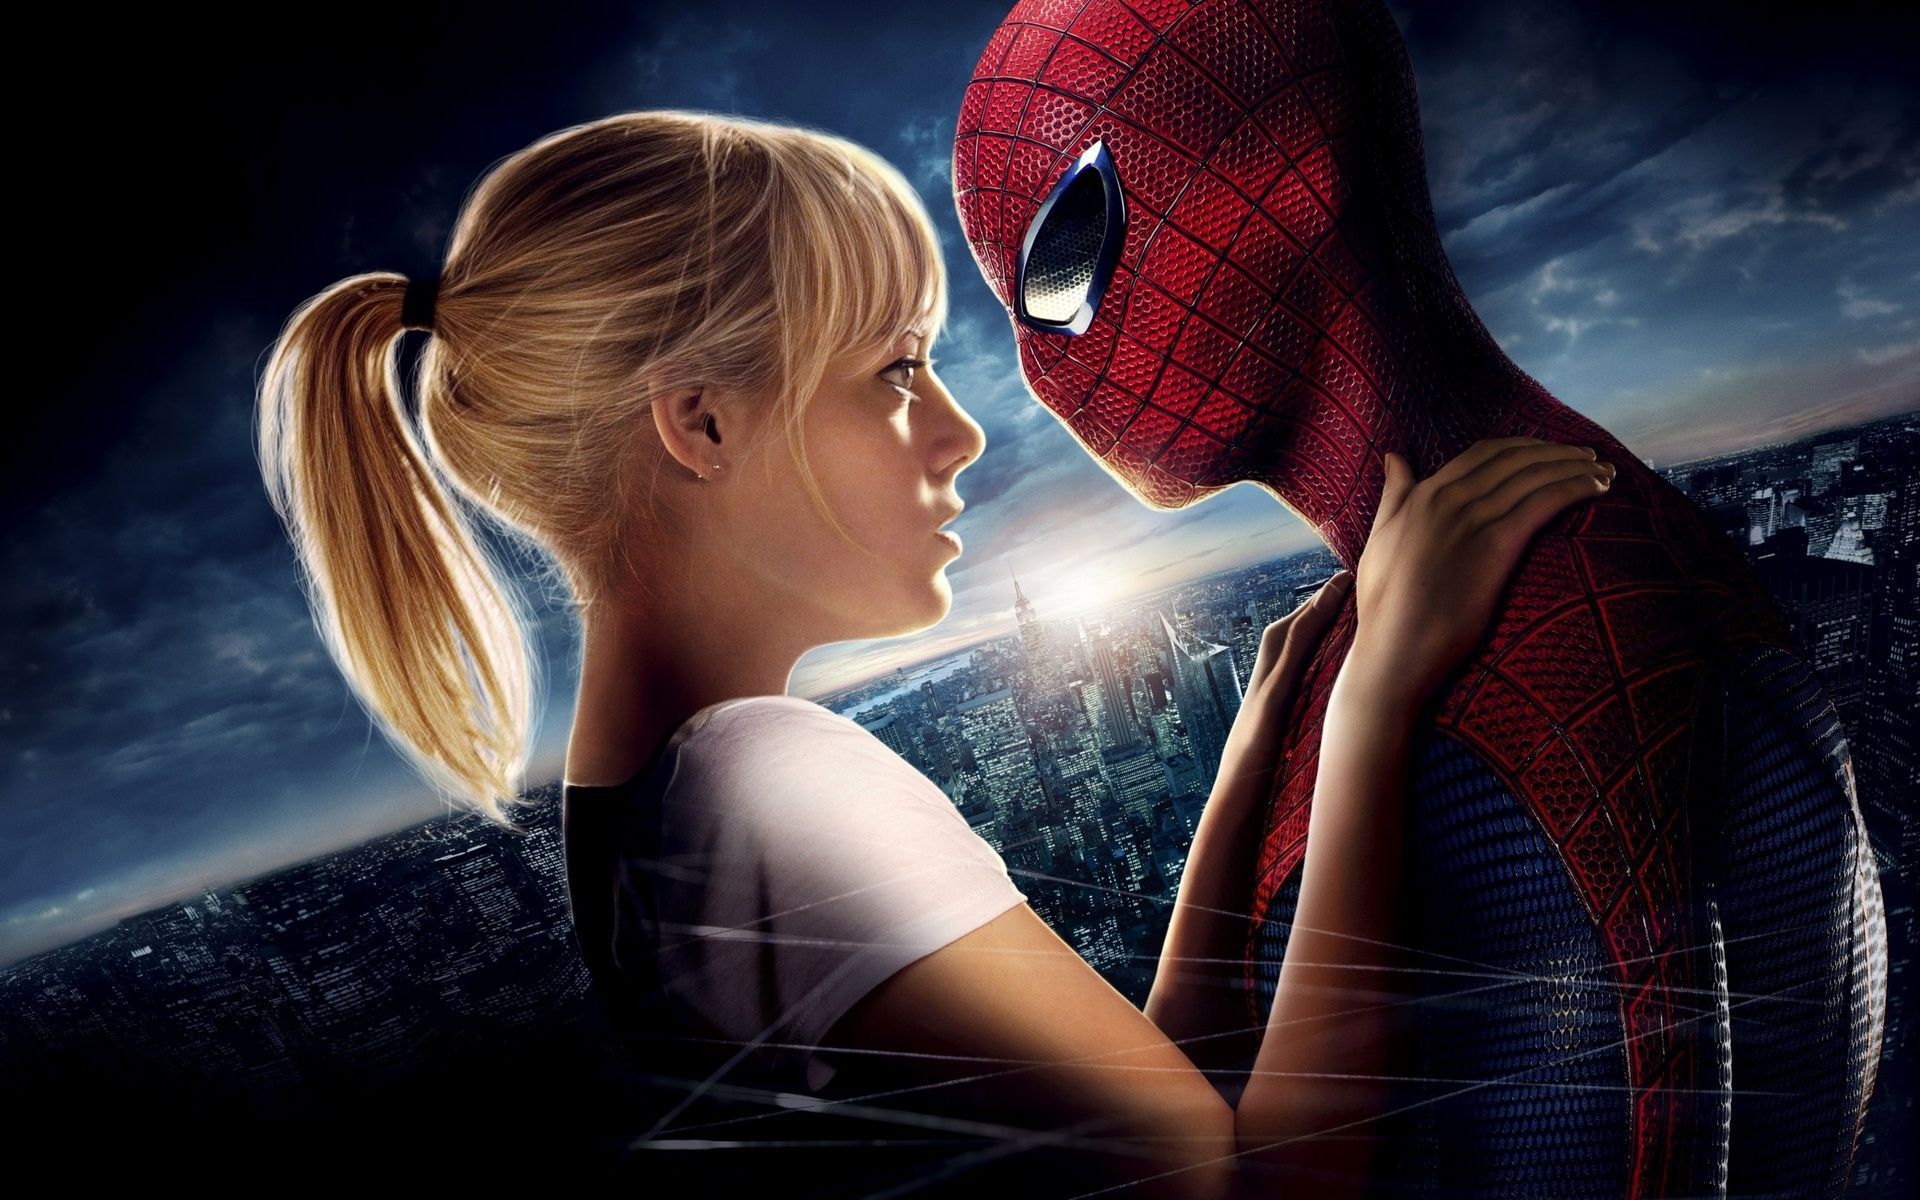 Amazing Spider-Man 2 HD Wallpapers - Zibrato